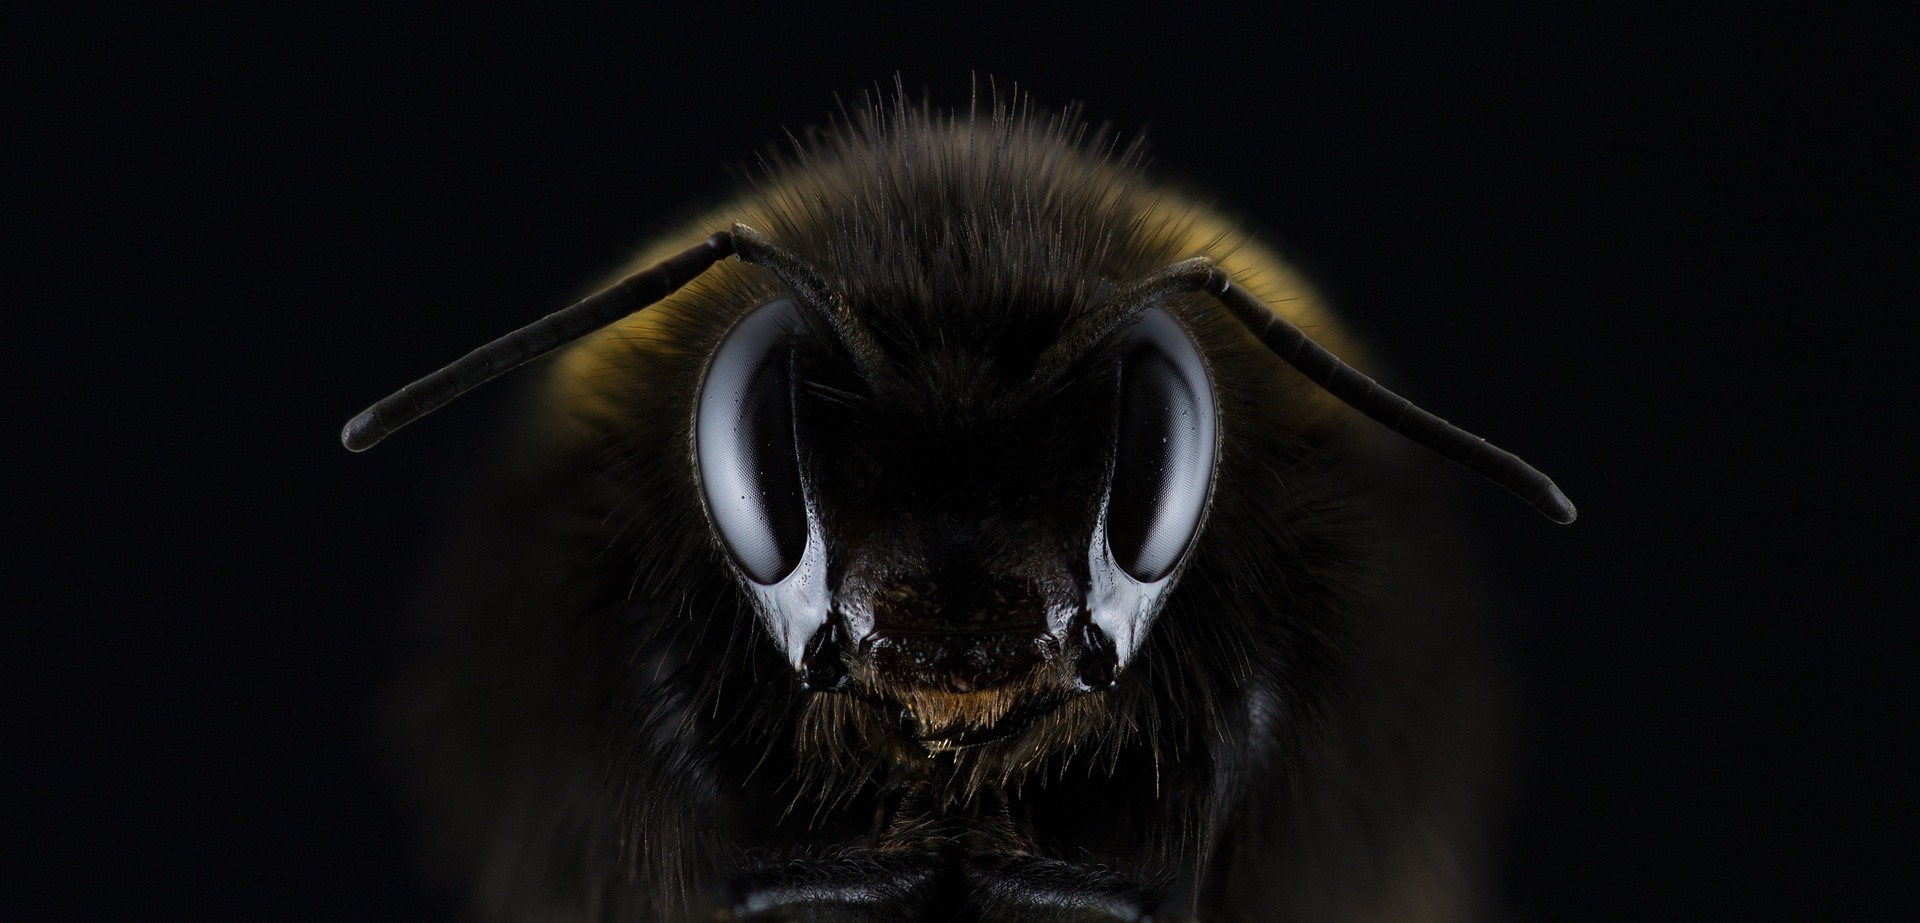 honeybee face